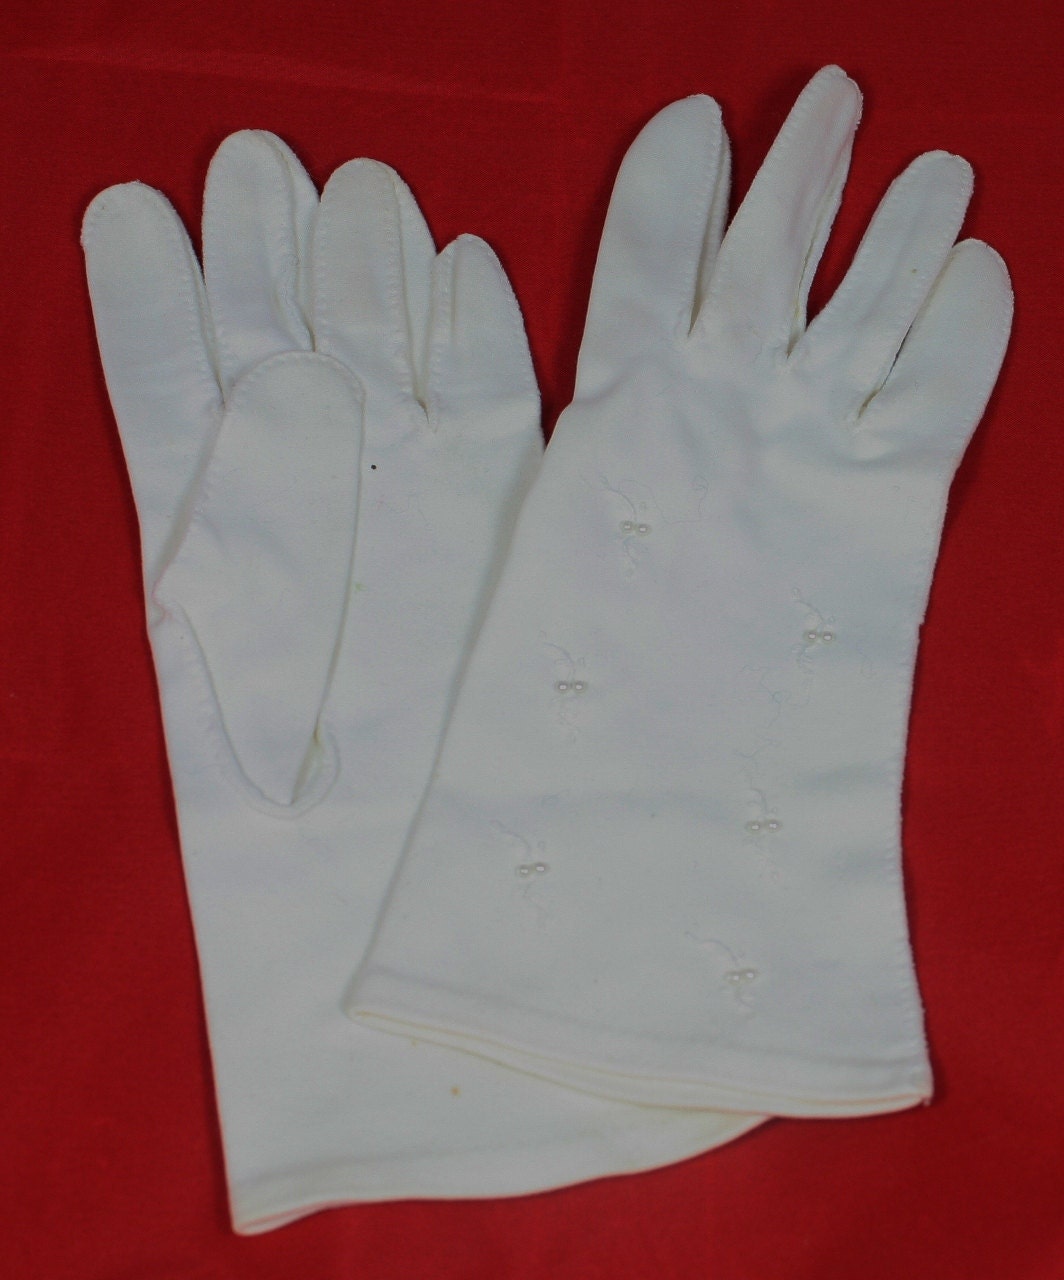 Vintage Gloves, Women's White Cotton Dress Gloves by Tildy